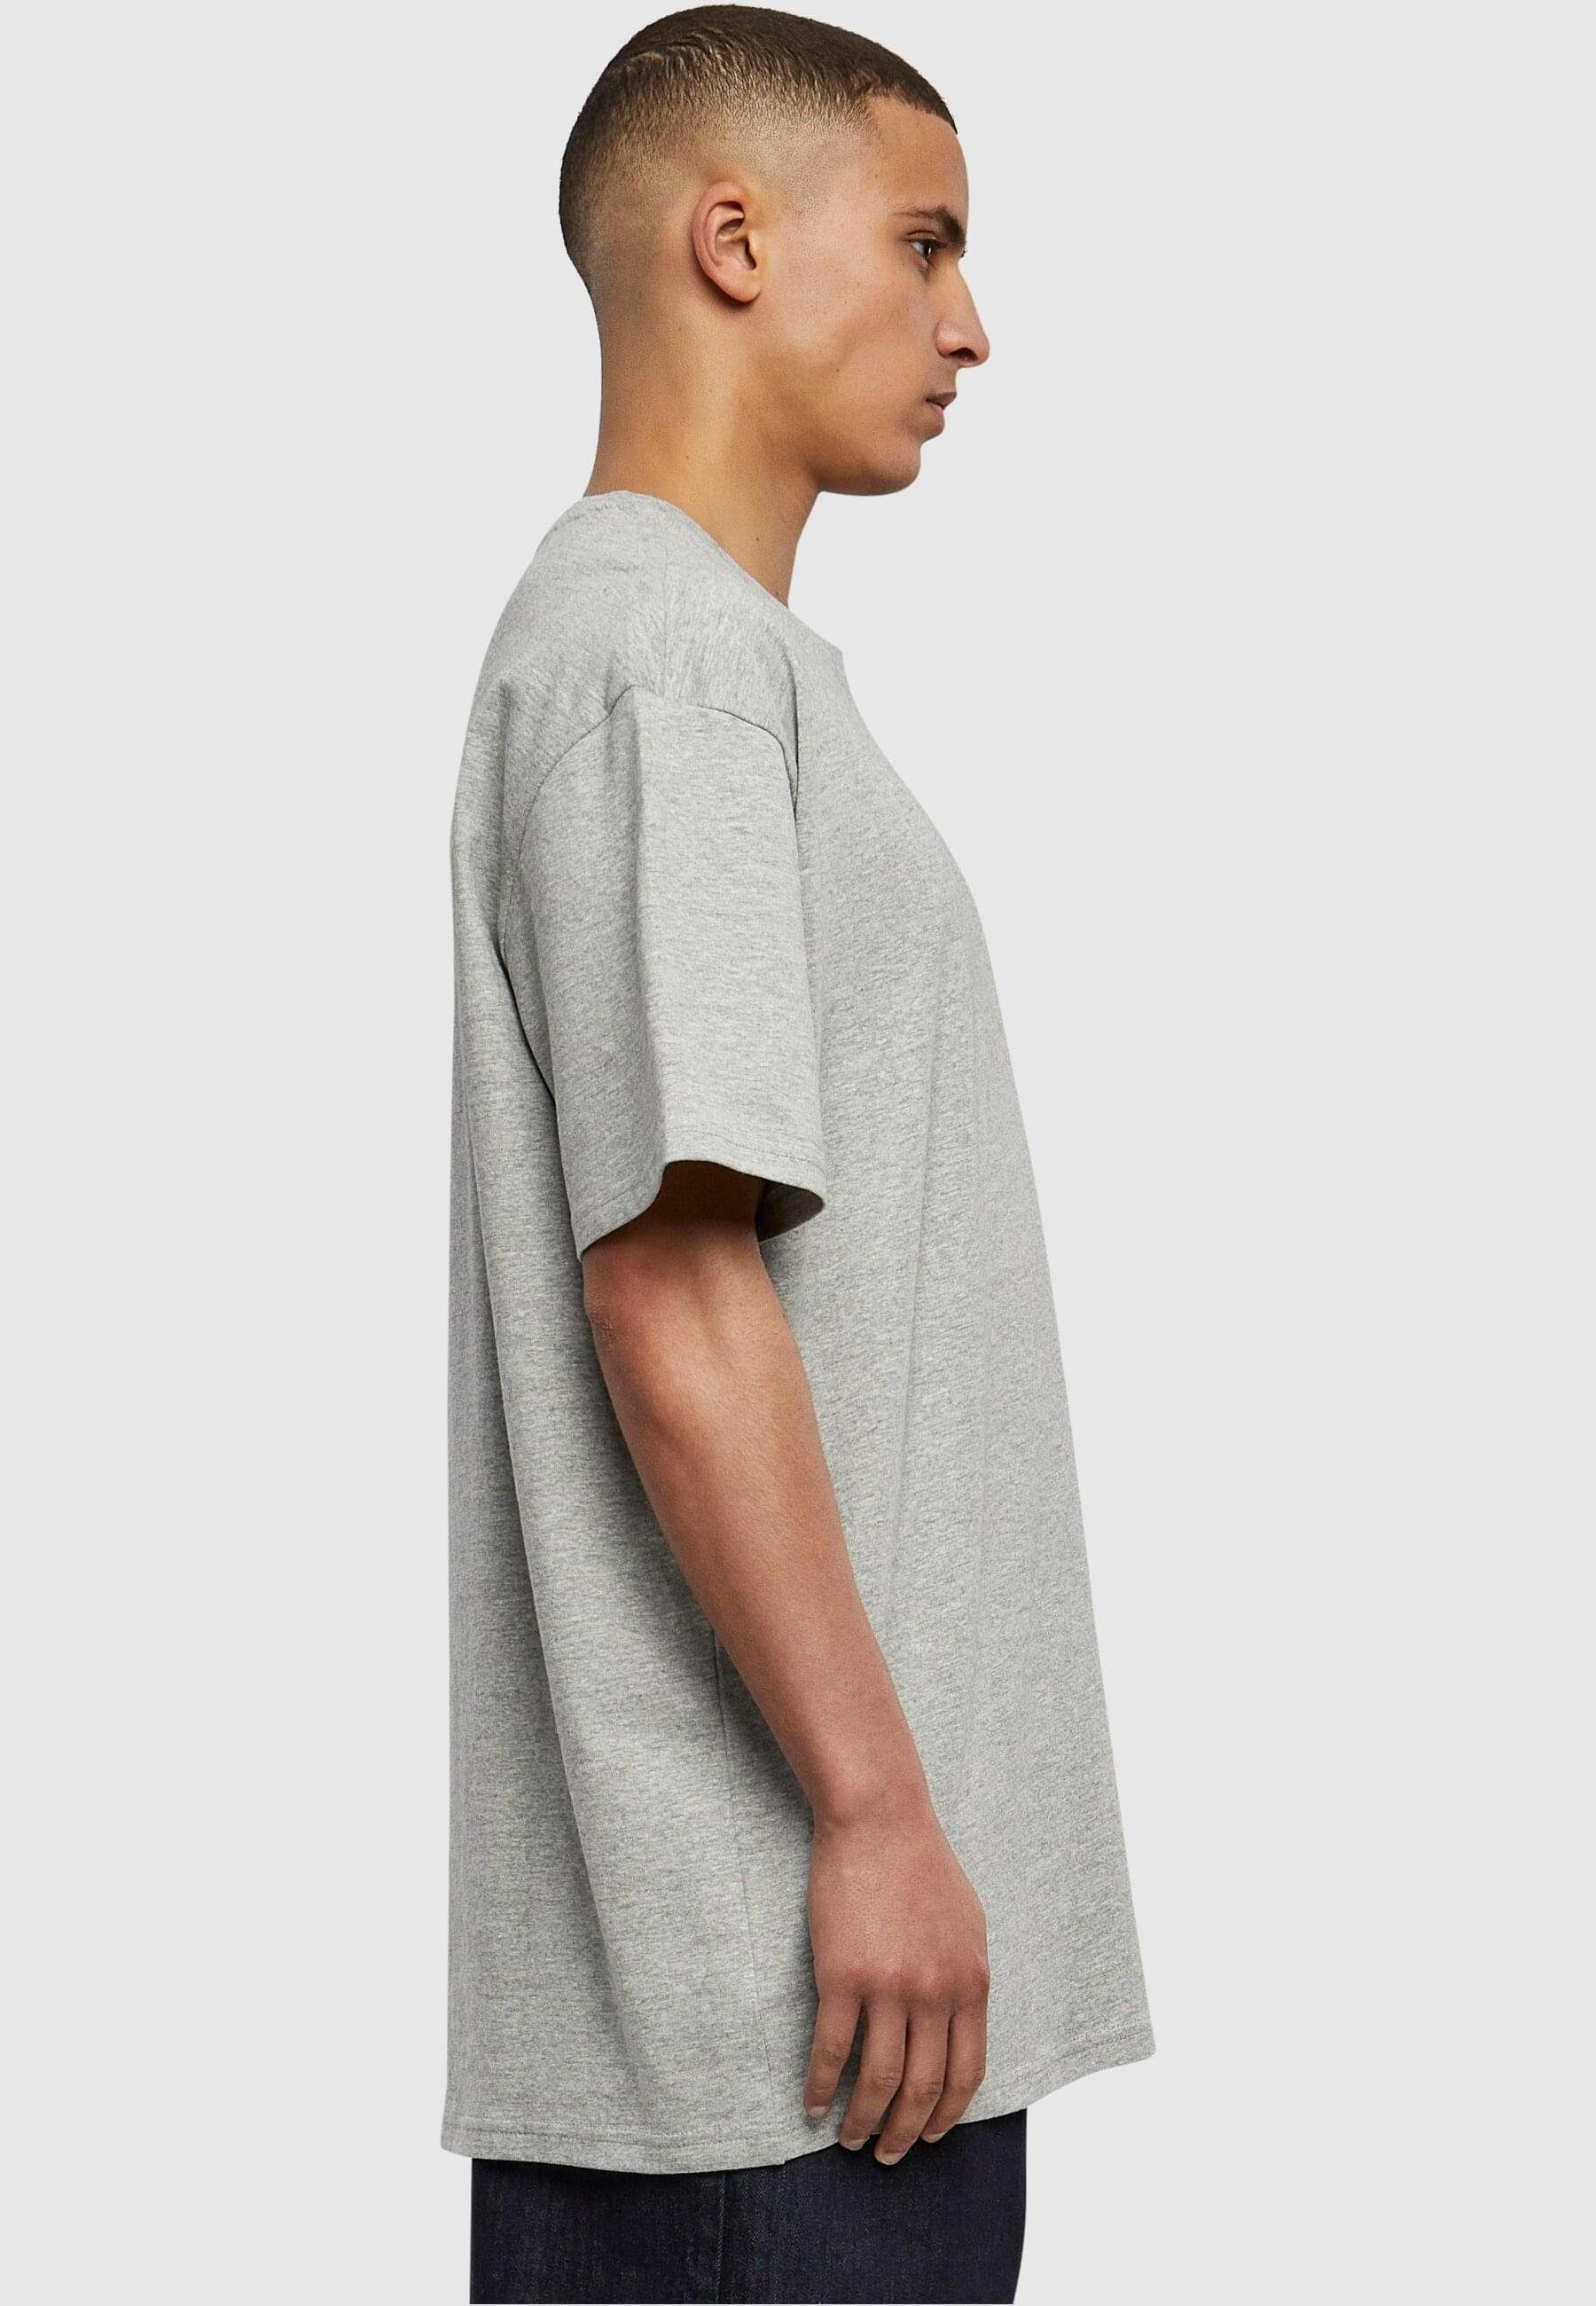 T-Shirt Tee URBAN grey CLASSICS Oversized Herren Heavy (1-tlg)